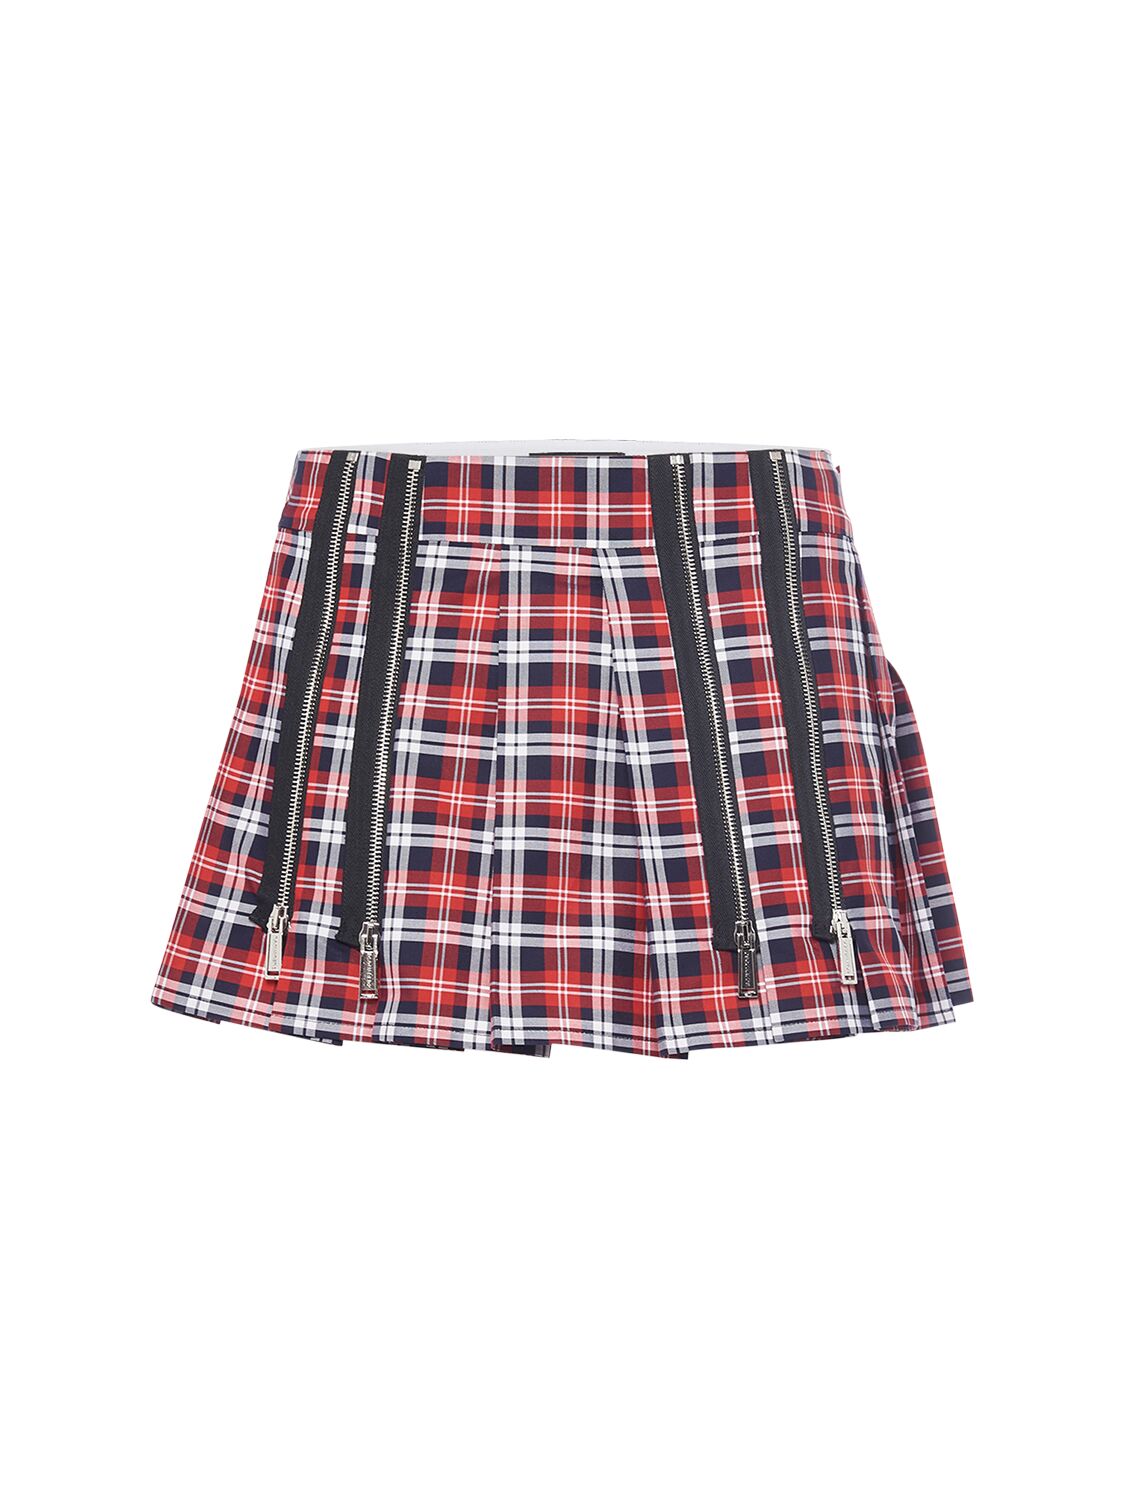 Image of Plaid Cotton Mini Skirt W/ Zips